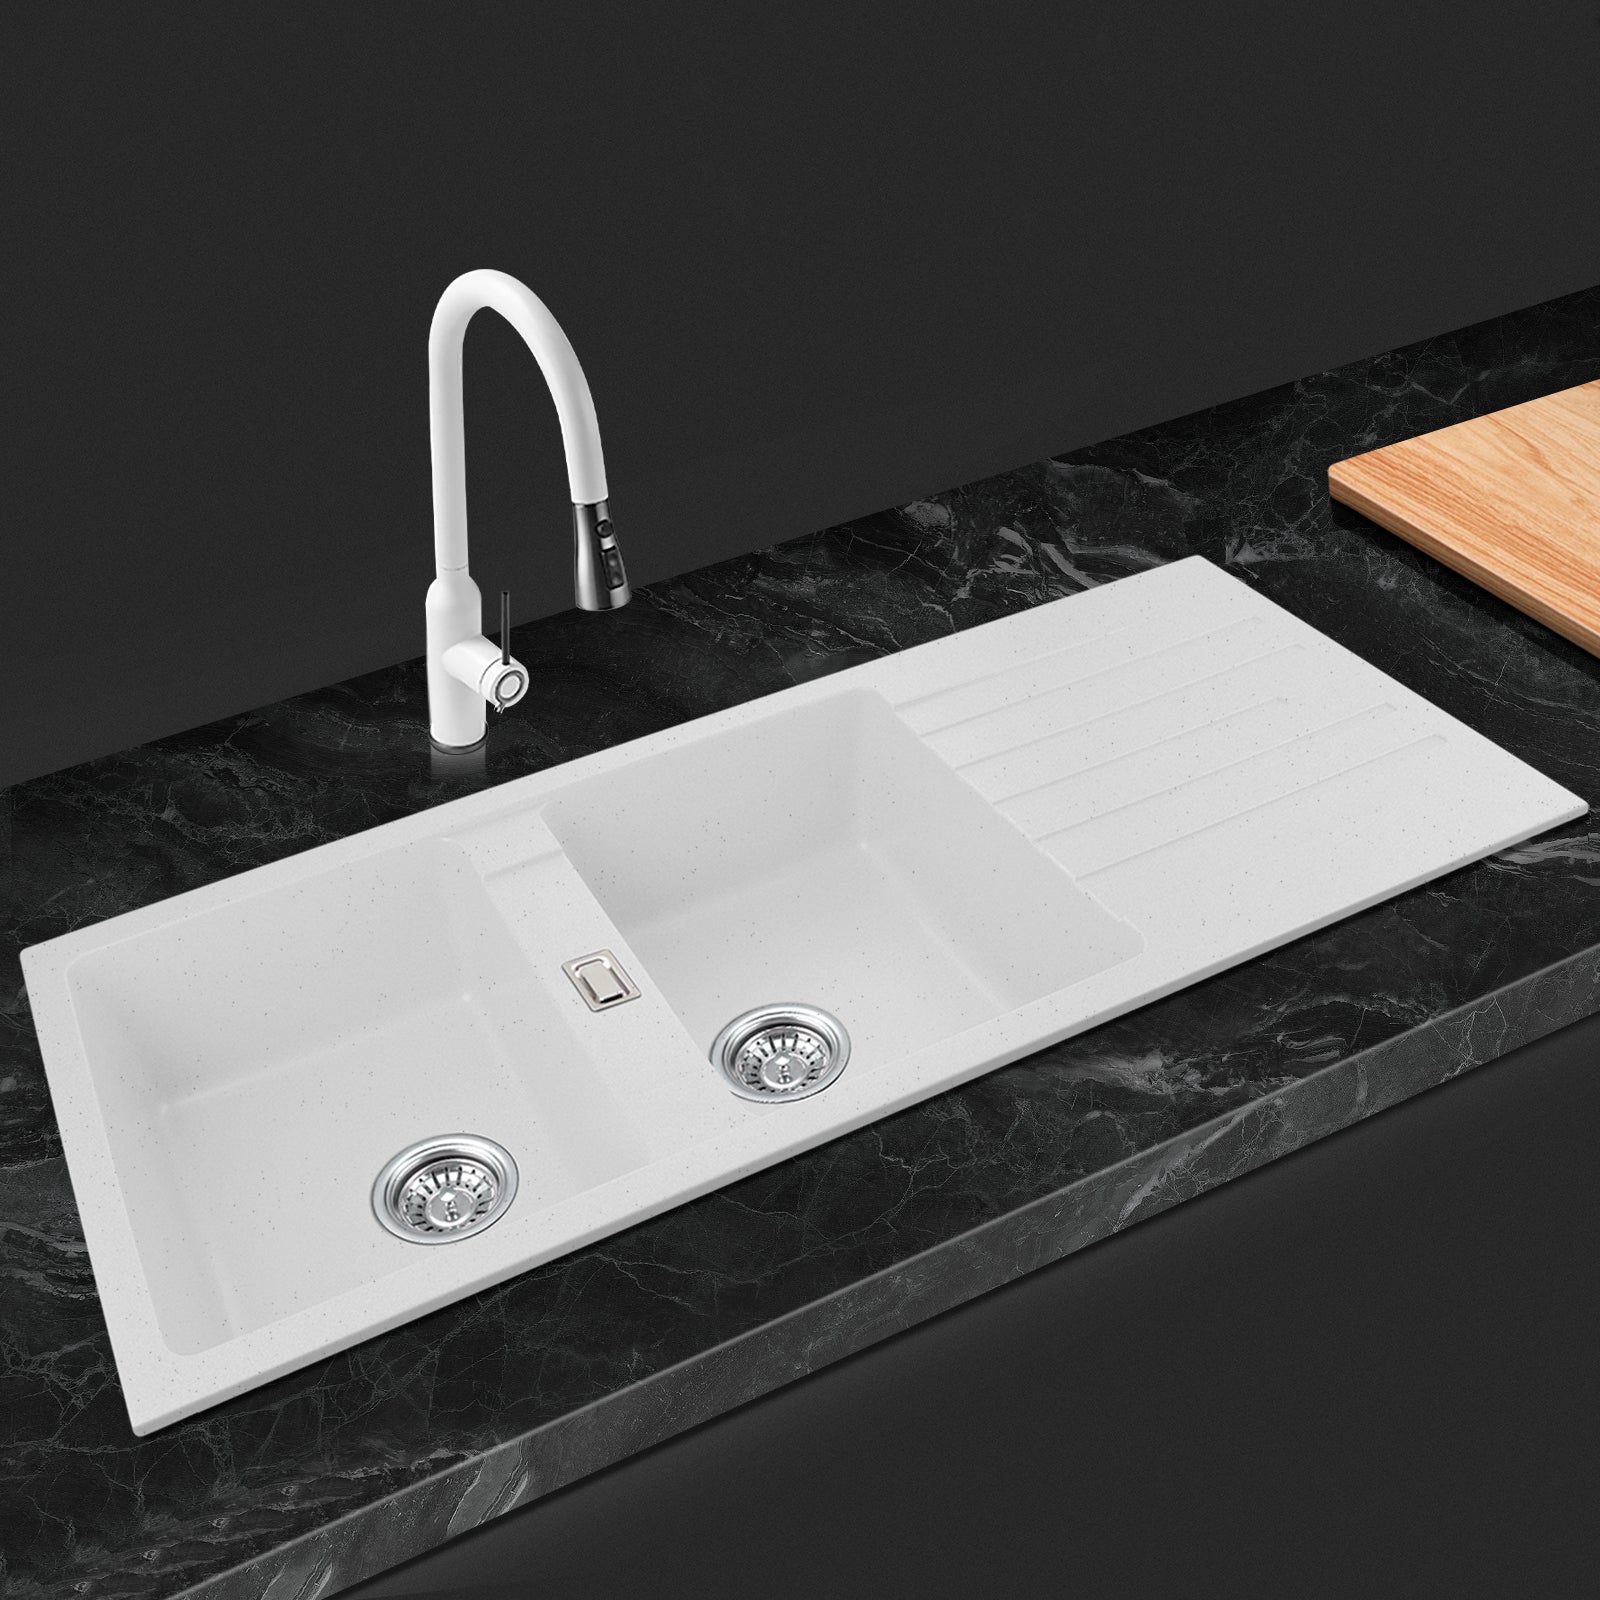 ACA 1160x500mm White Granite Stone Double Bowls Kitchen Sink Drainboard Top/Flush Mount